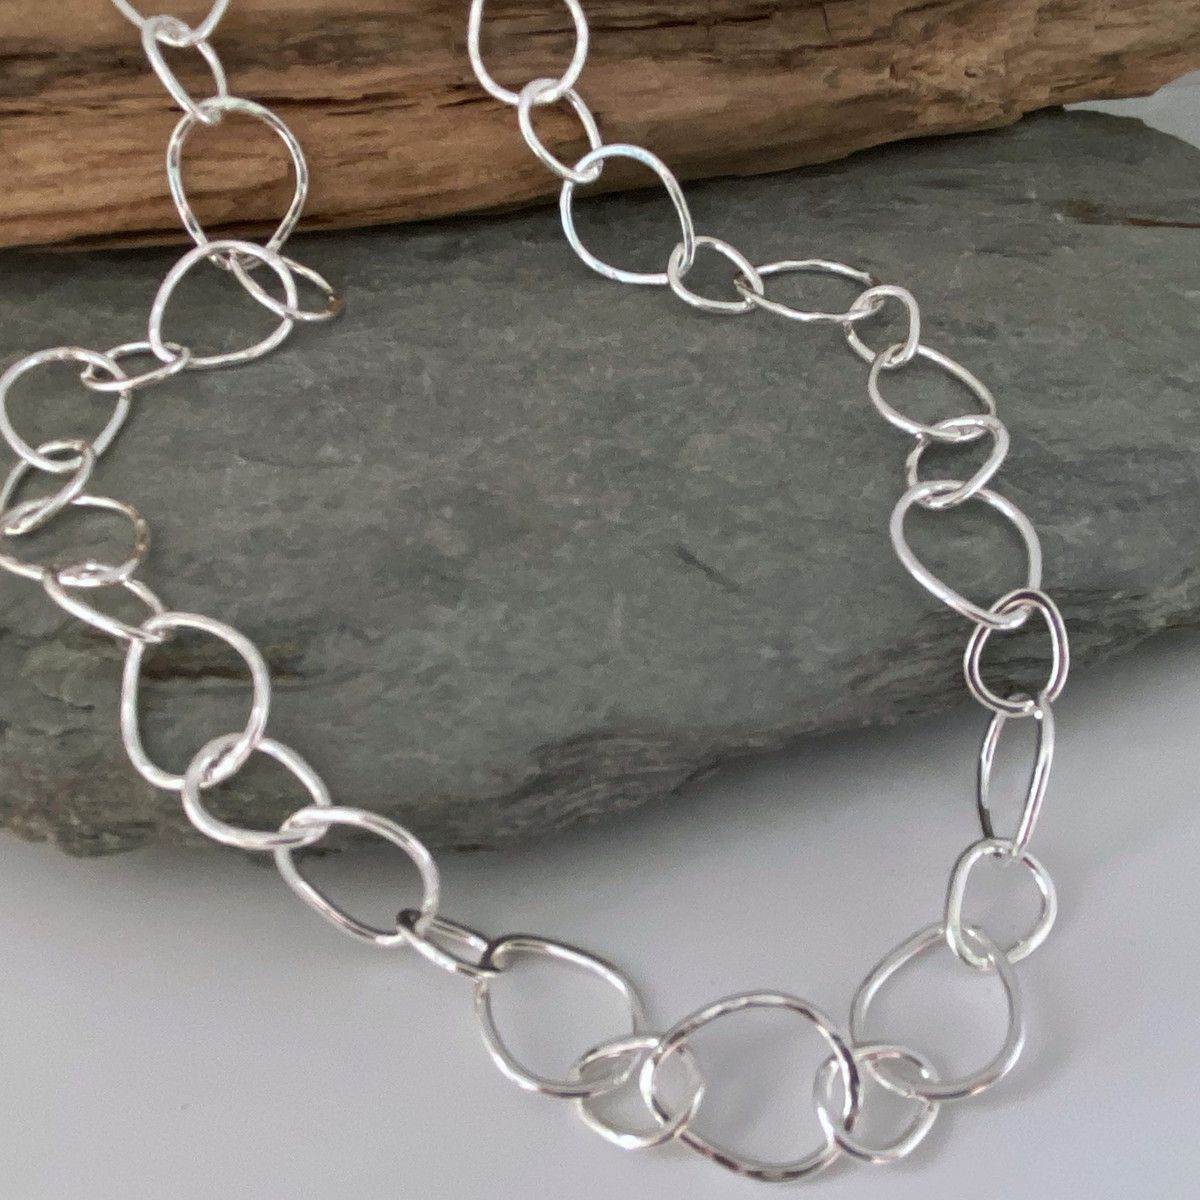 Teardrop links chain necklace